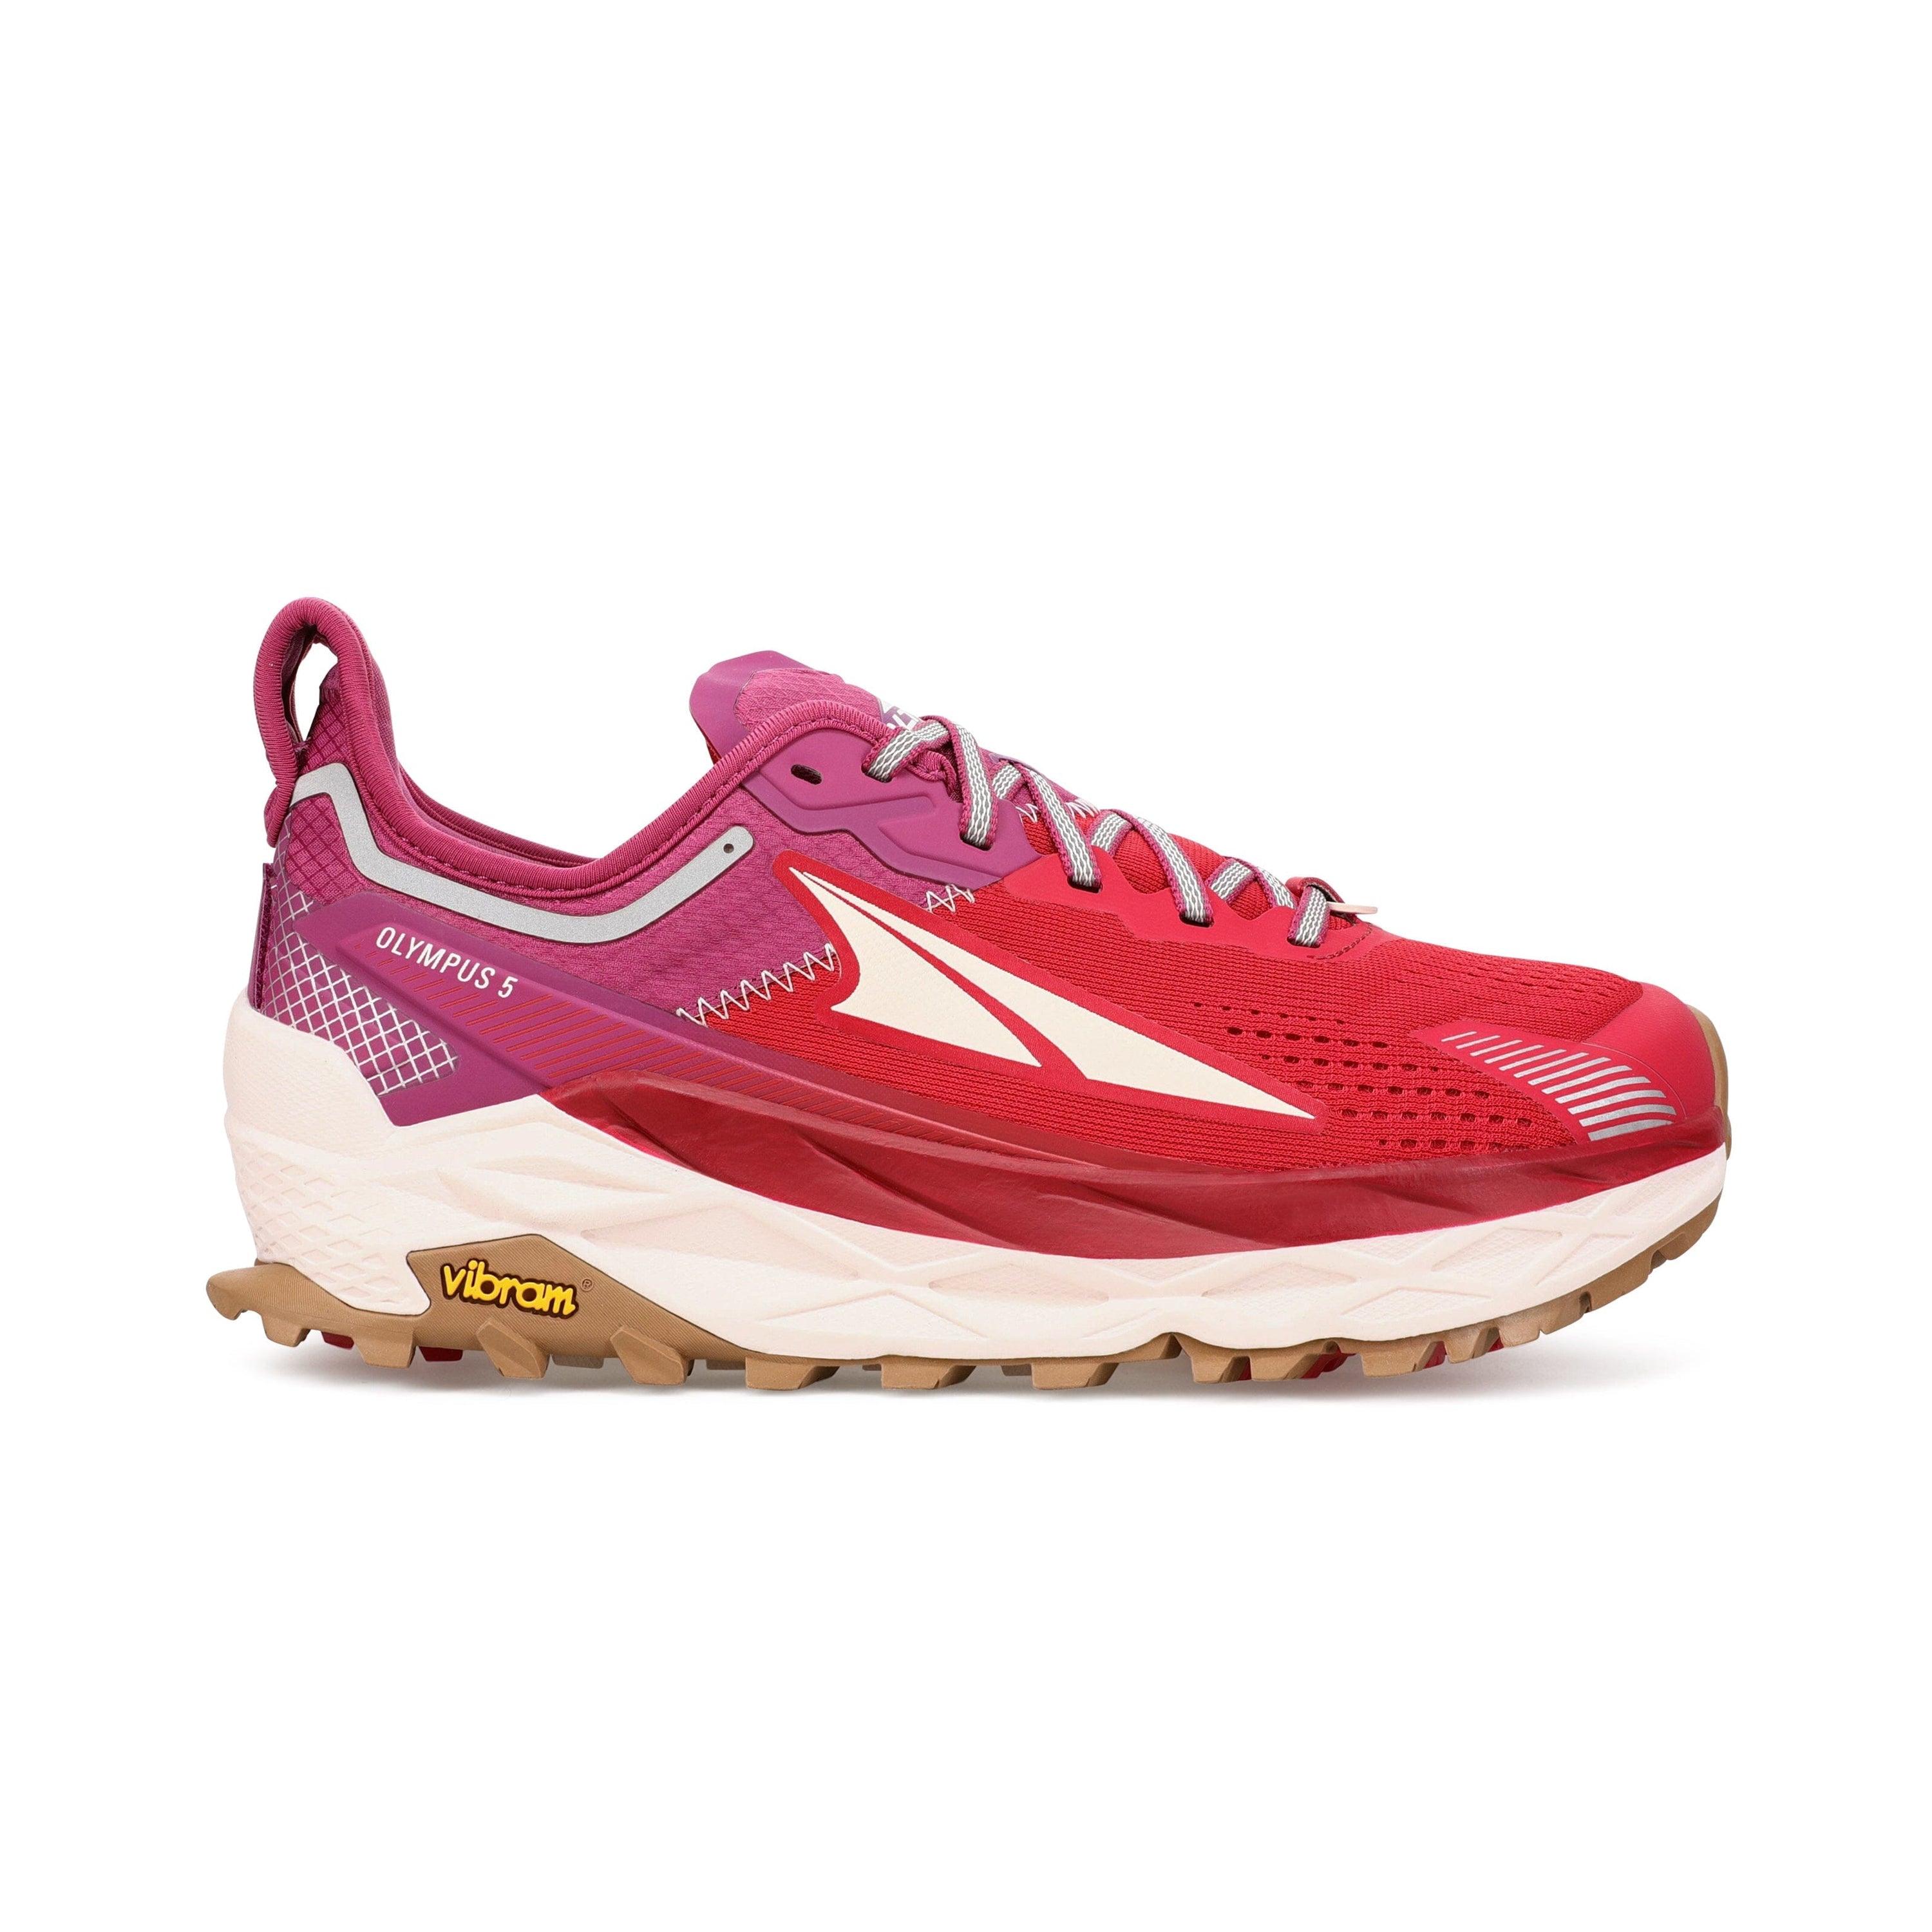 Altra Women's Olympus 5 Trail Running Shoes Raspberry US 5.5 | EUR 36 | UK 3.5 